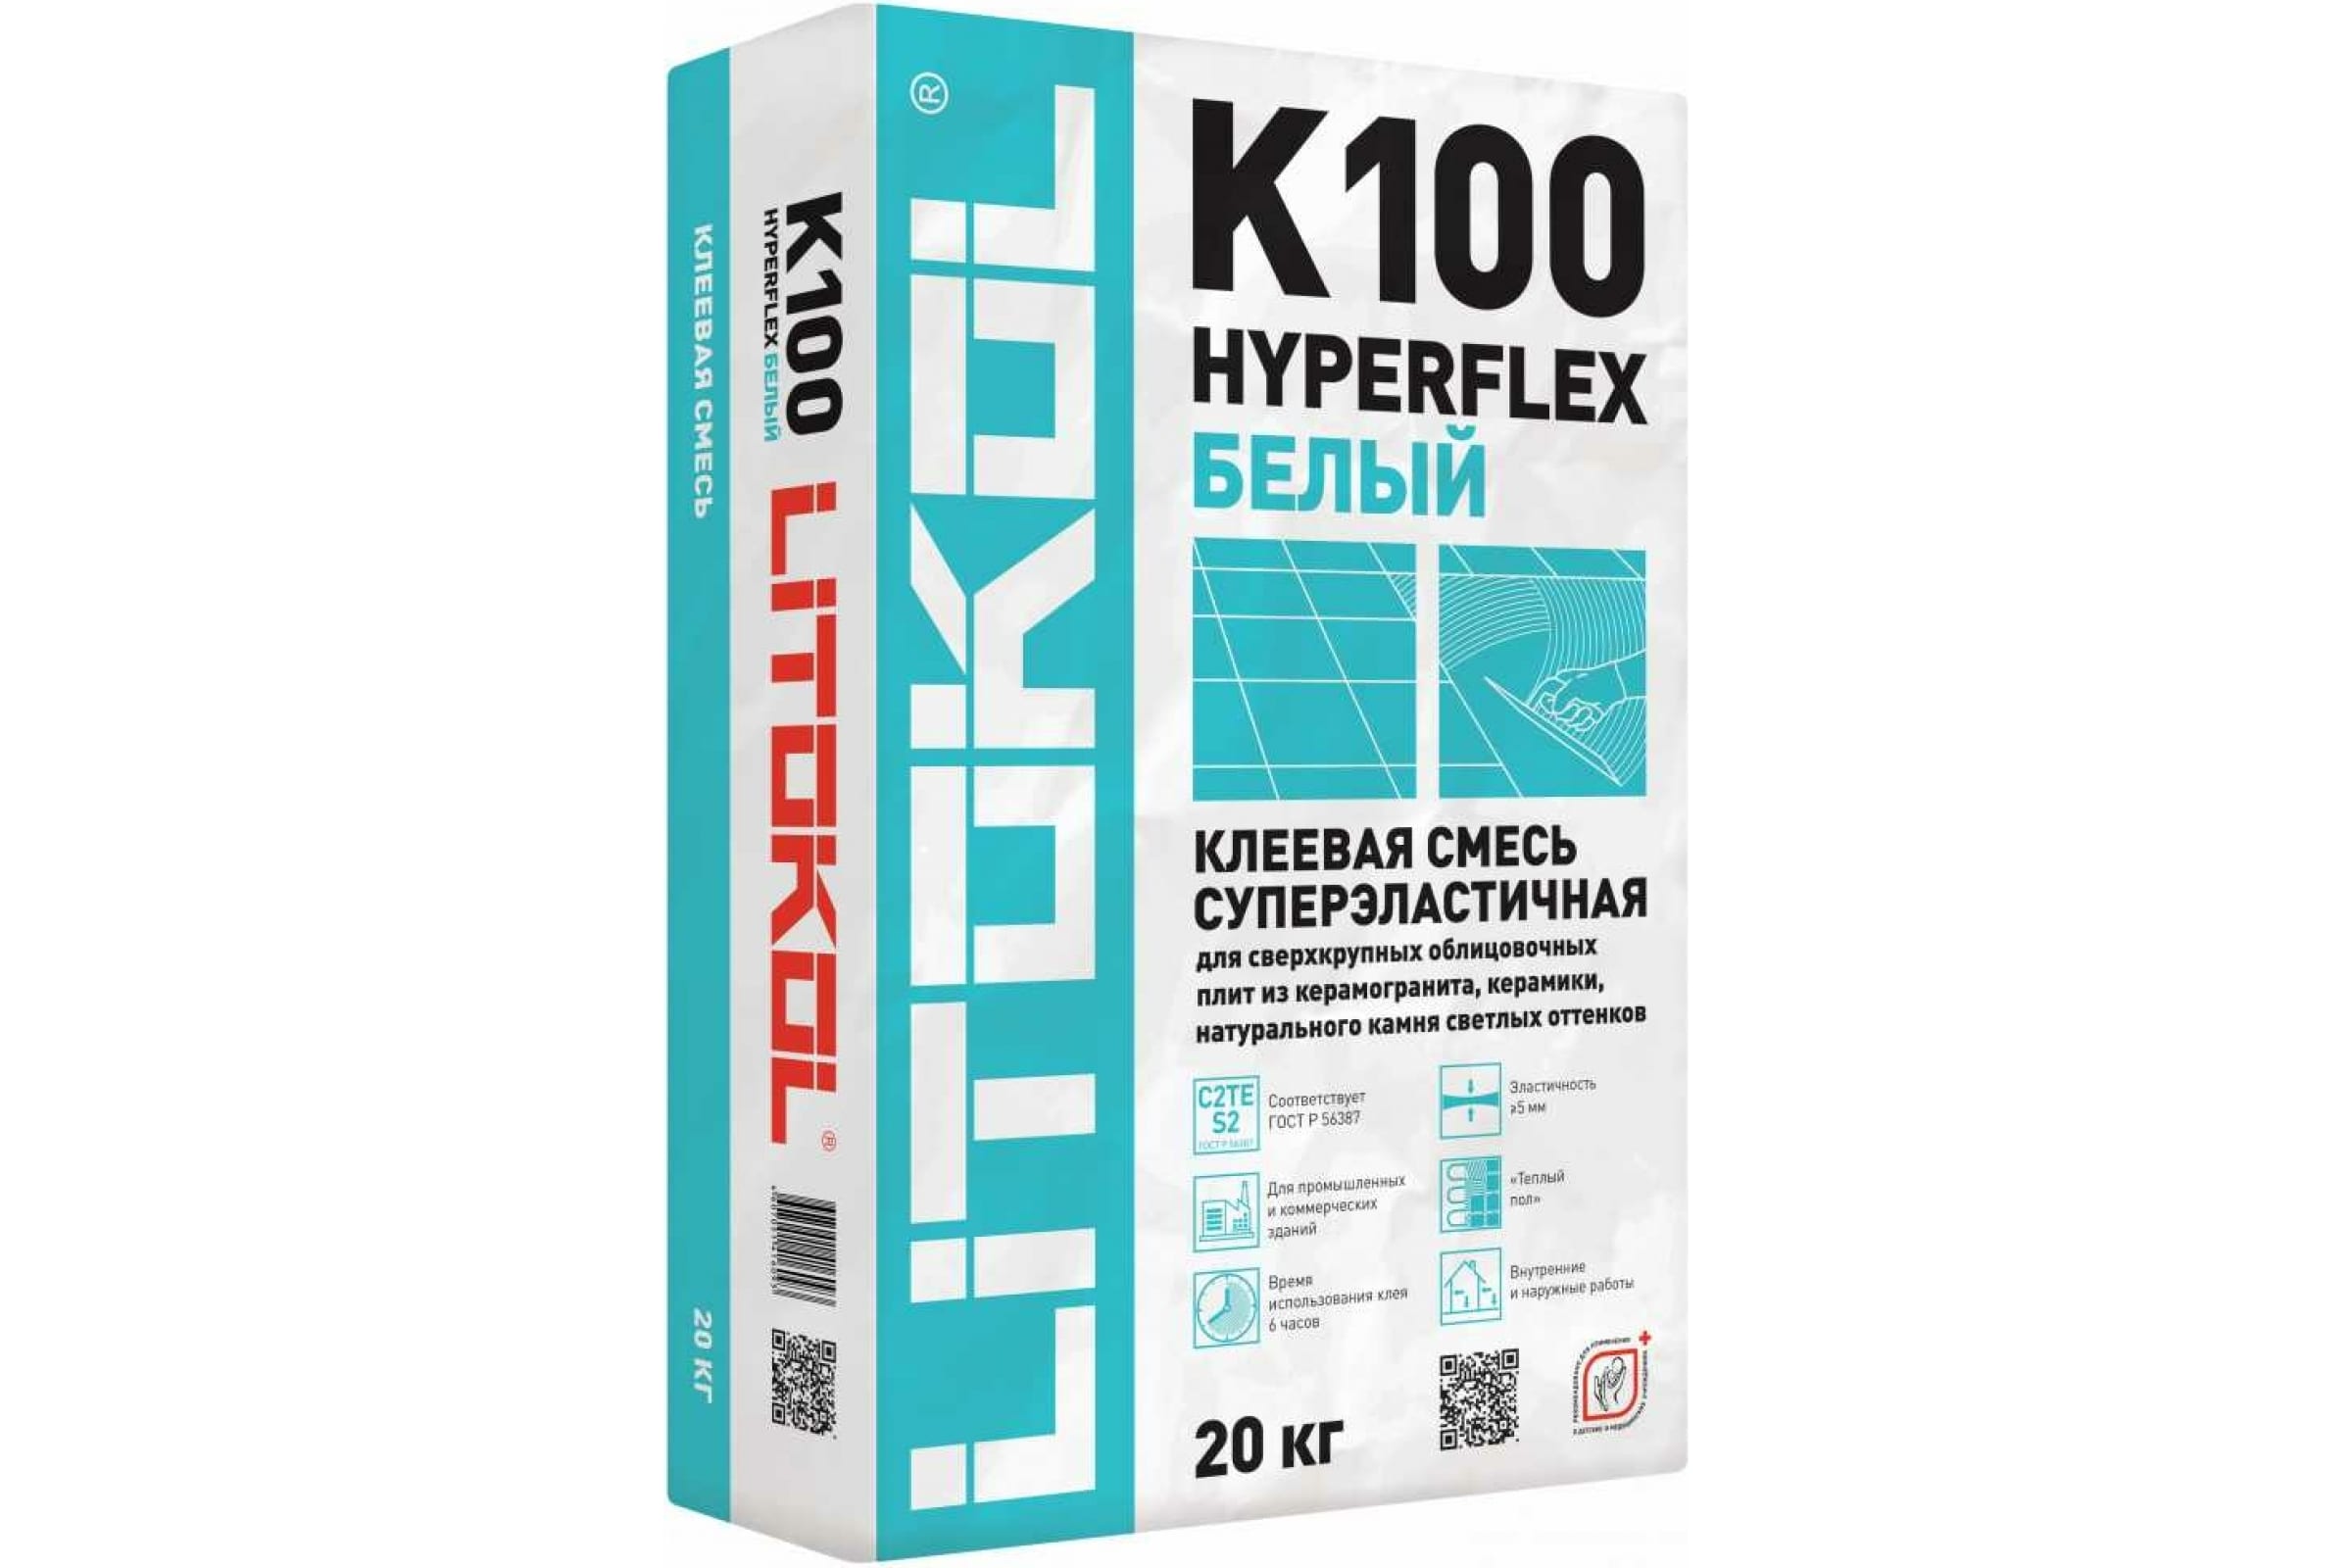 фото Litokol hyperflex k100 белый-клеевая смесь (20kg bag) 479930002